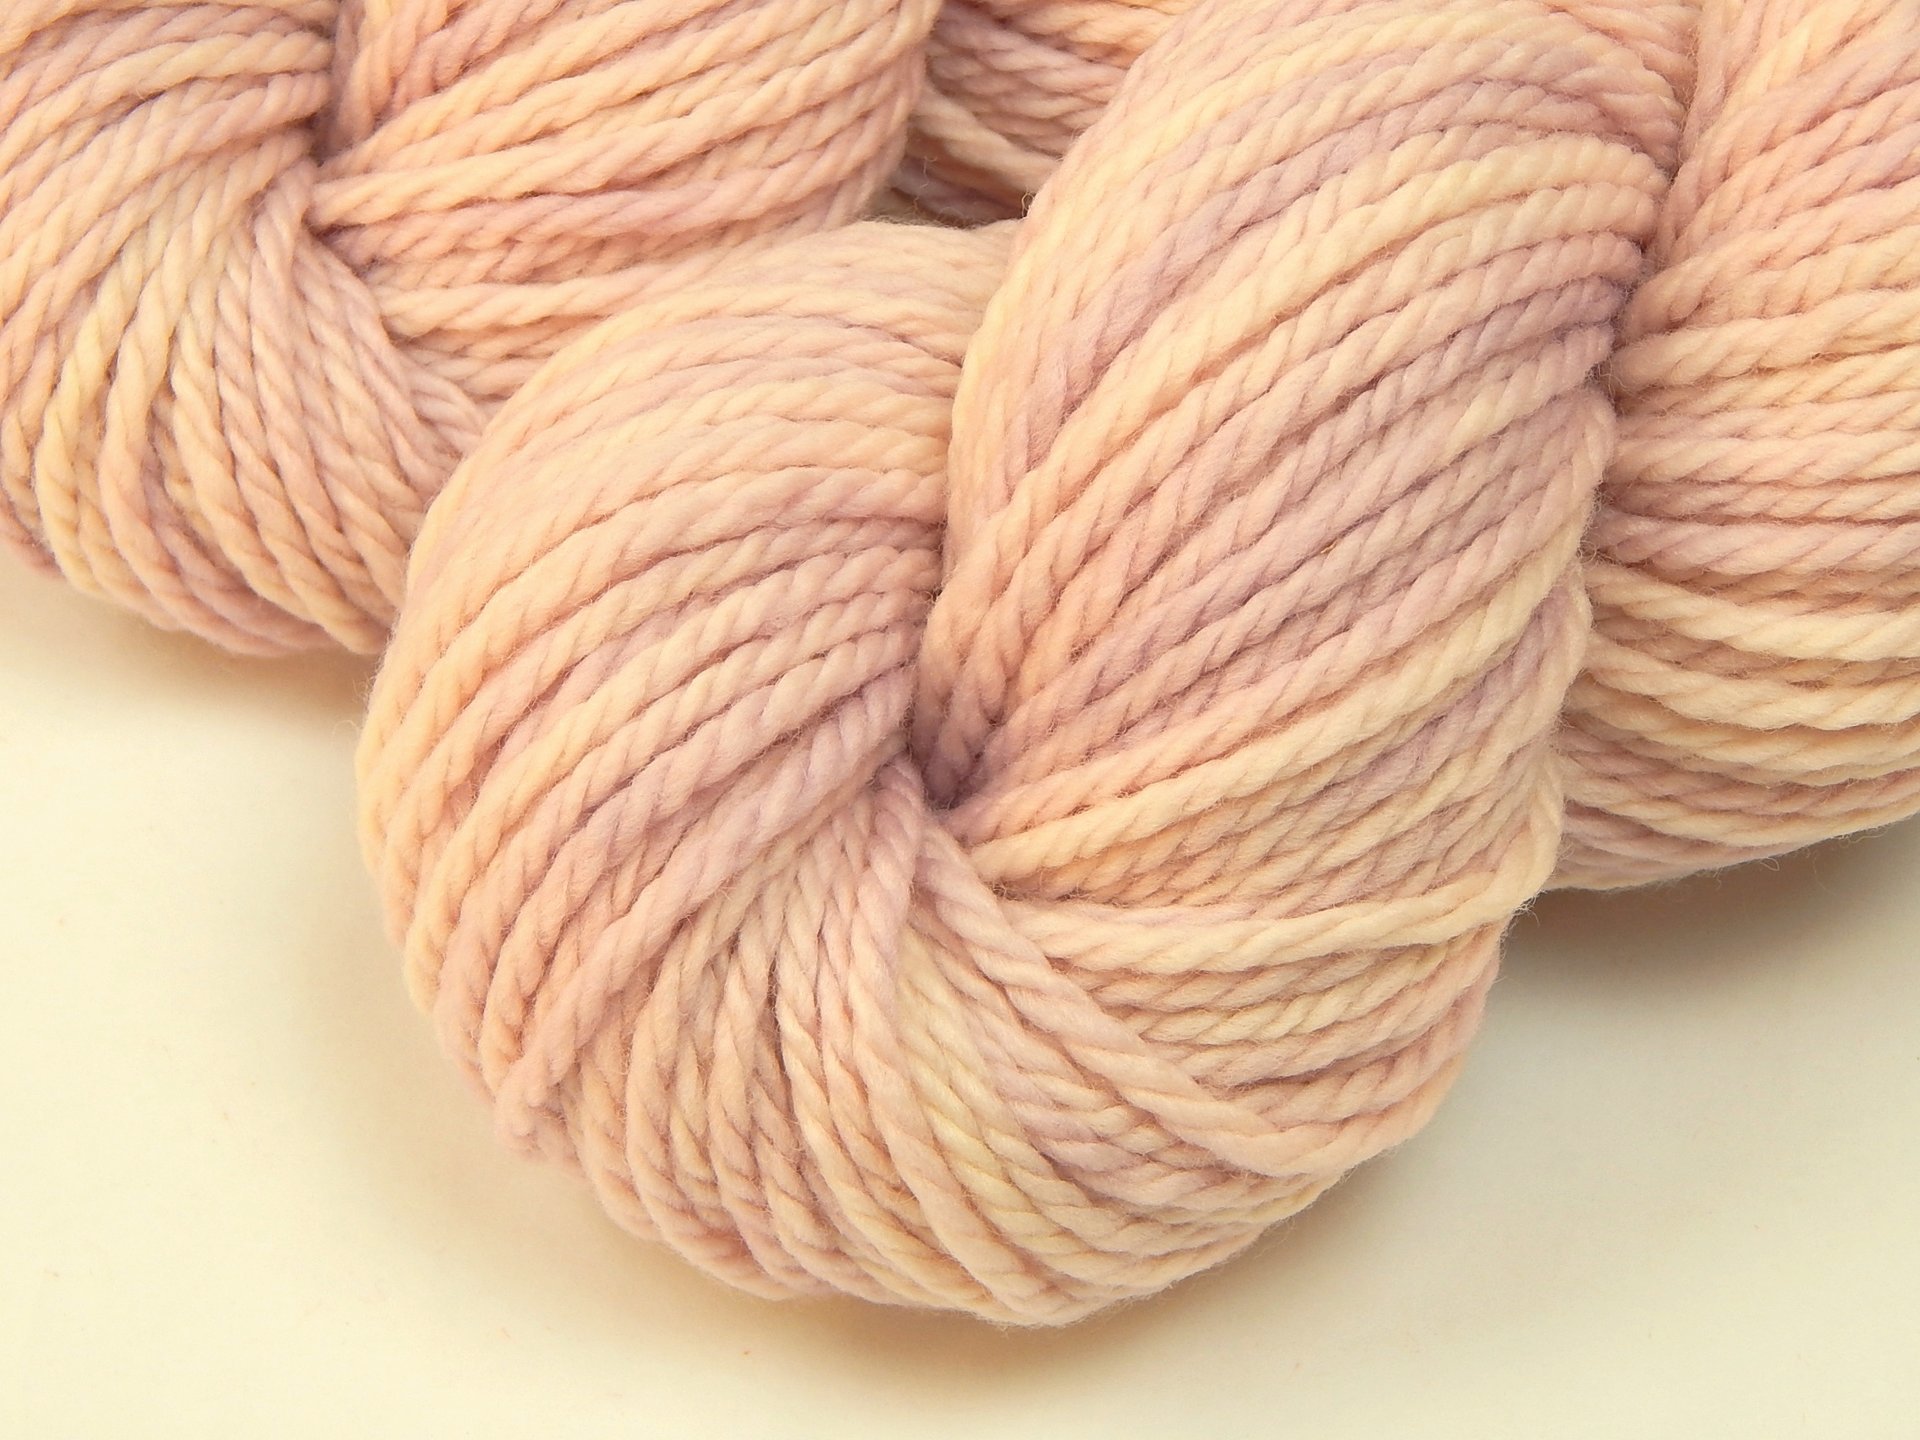 Bulky Hand Dyed Yarn, 100% Superwash Merino Wool - Petal - Semi Solid Pale Pink Chunky Knitting Yarn